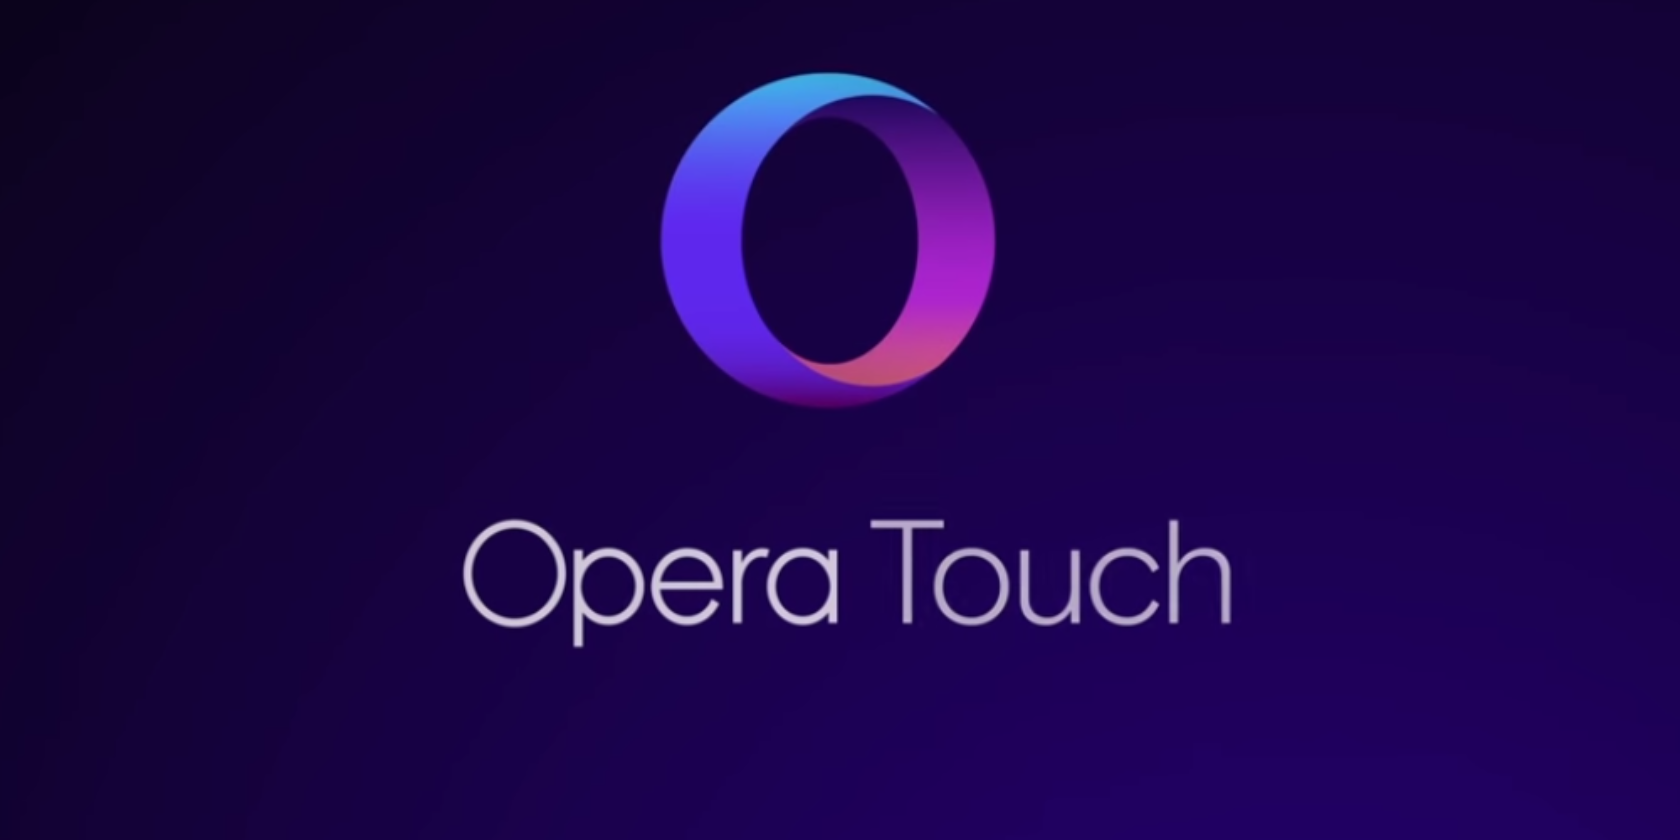 opera touch or opera mini